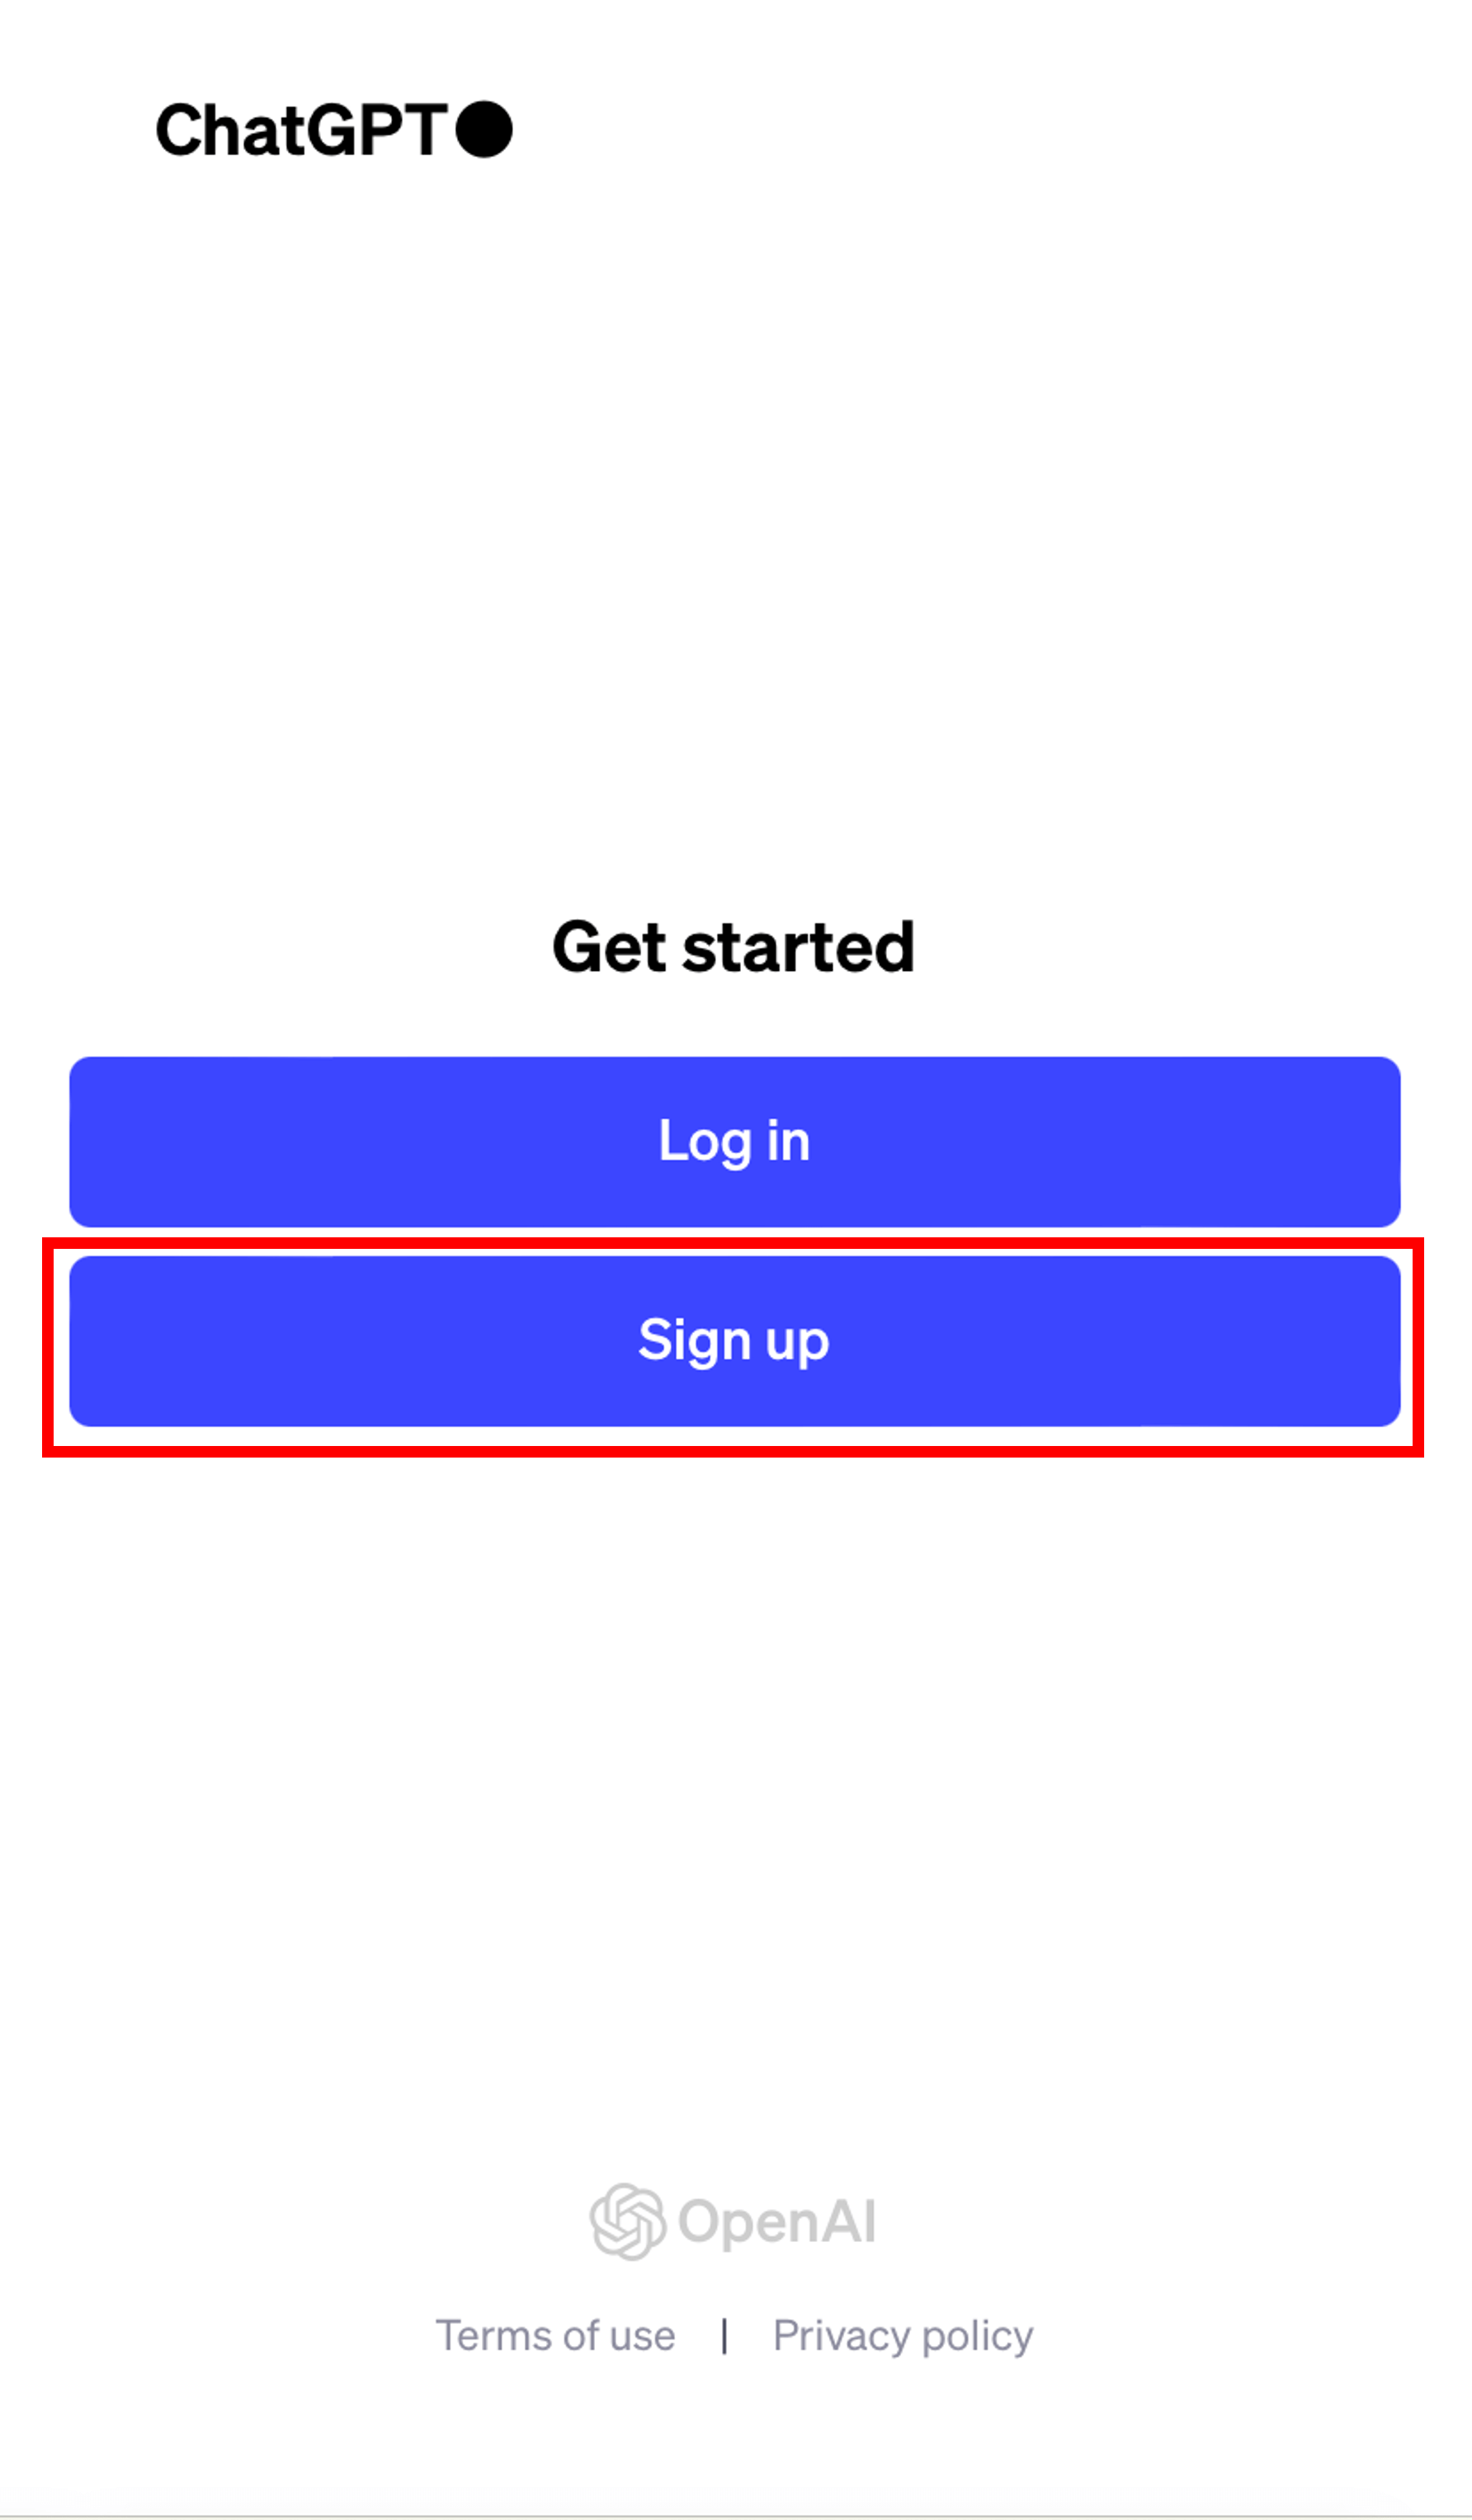 ChatGPTトップ画面で「Sign up」を選択するスクリーンショット